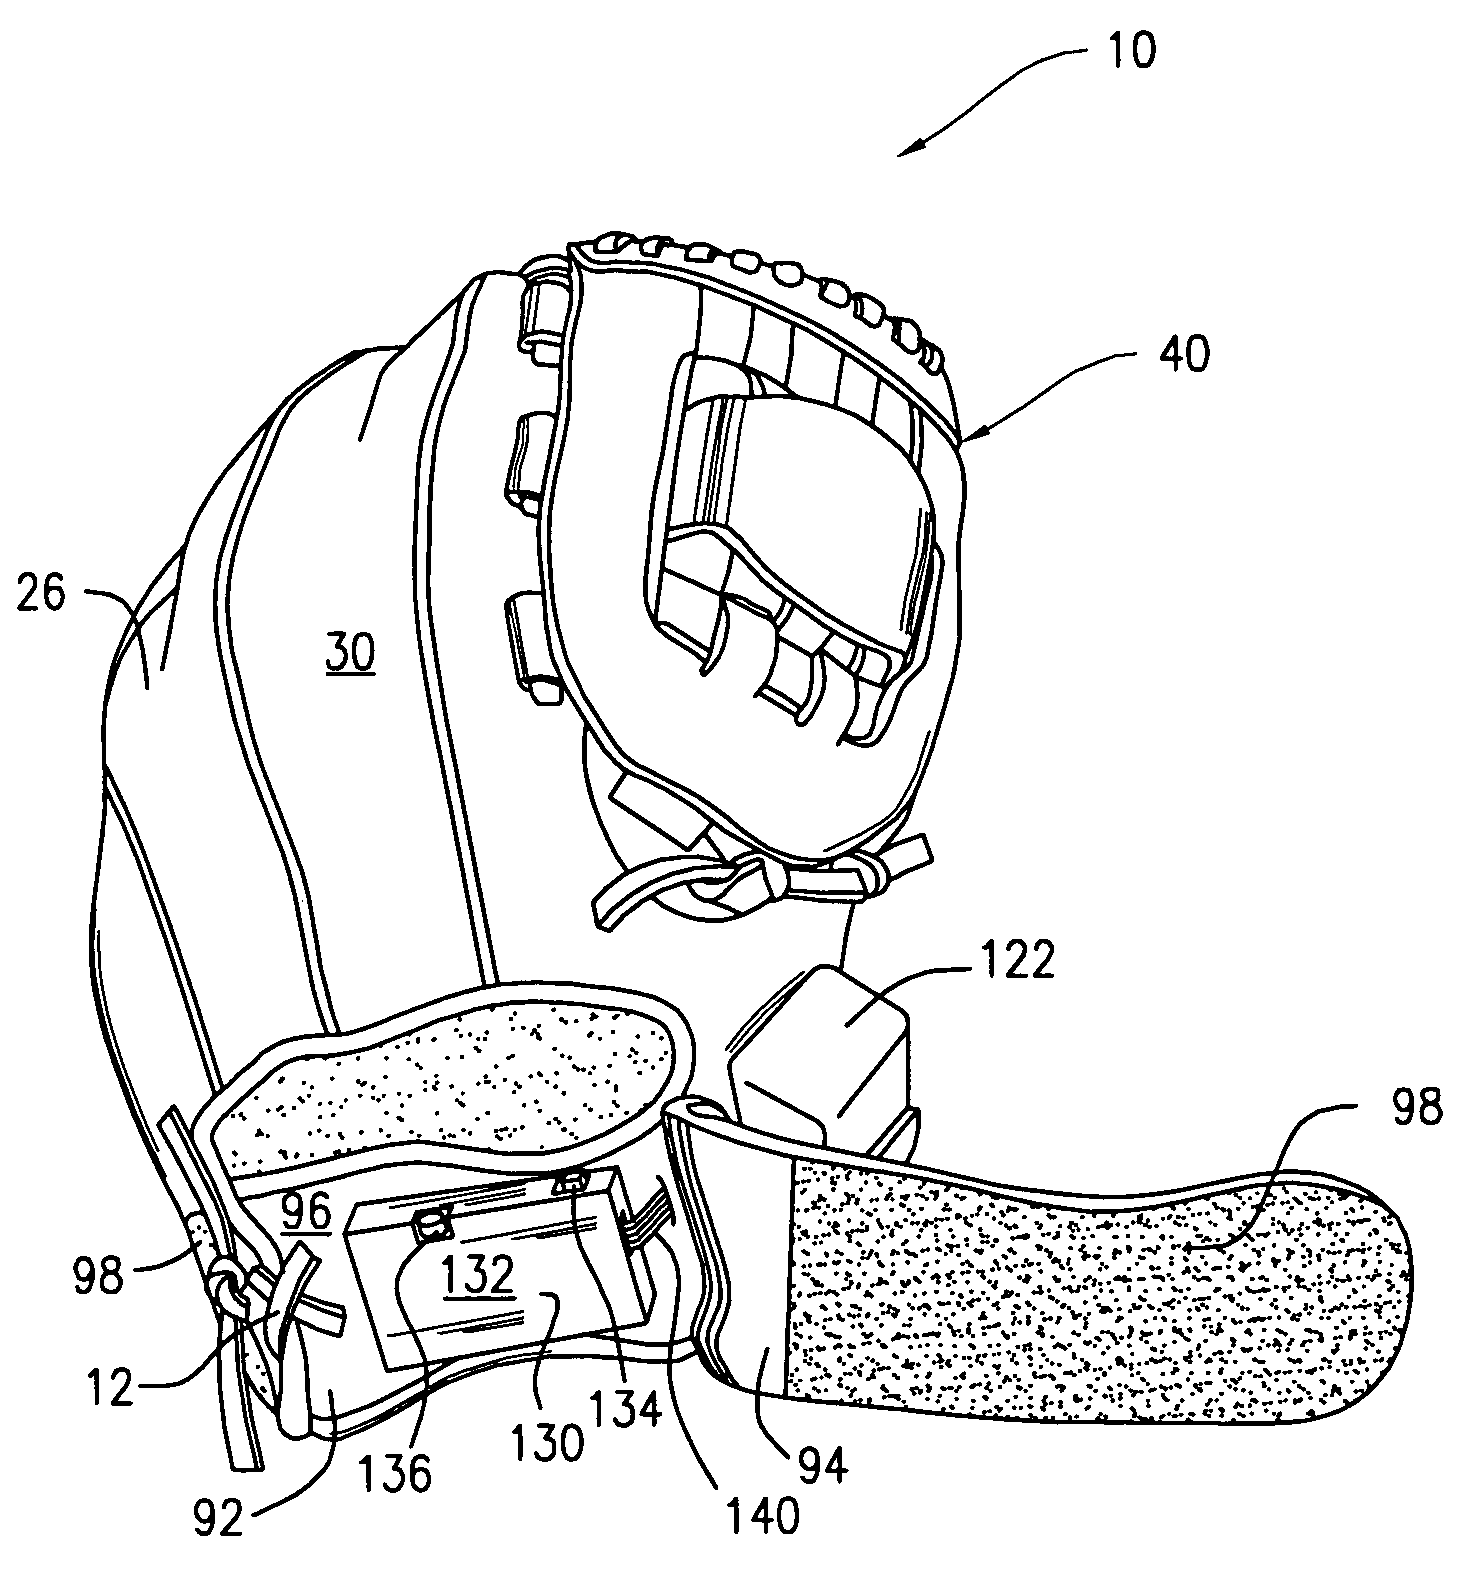 Heated baseball glove/mitt and method of heating a baseball bat handle